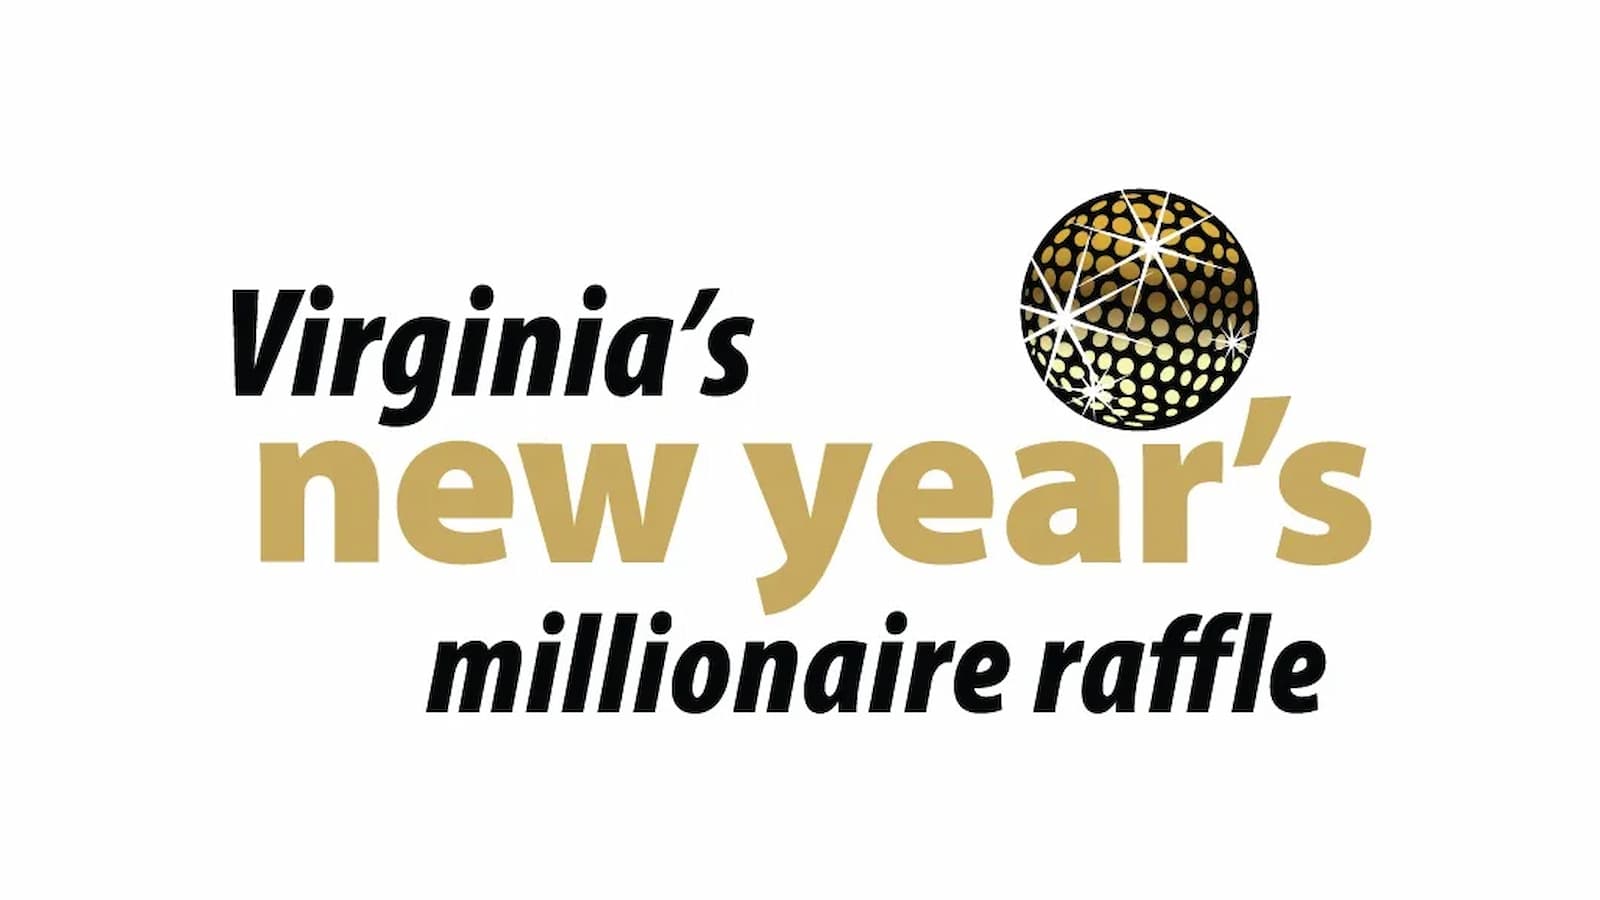 Winners of Virginia's New Year's Millionaire Raffle revealed